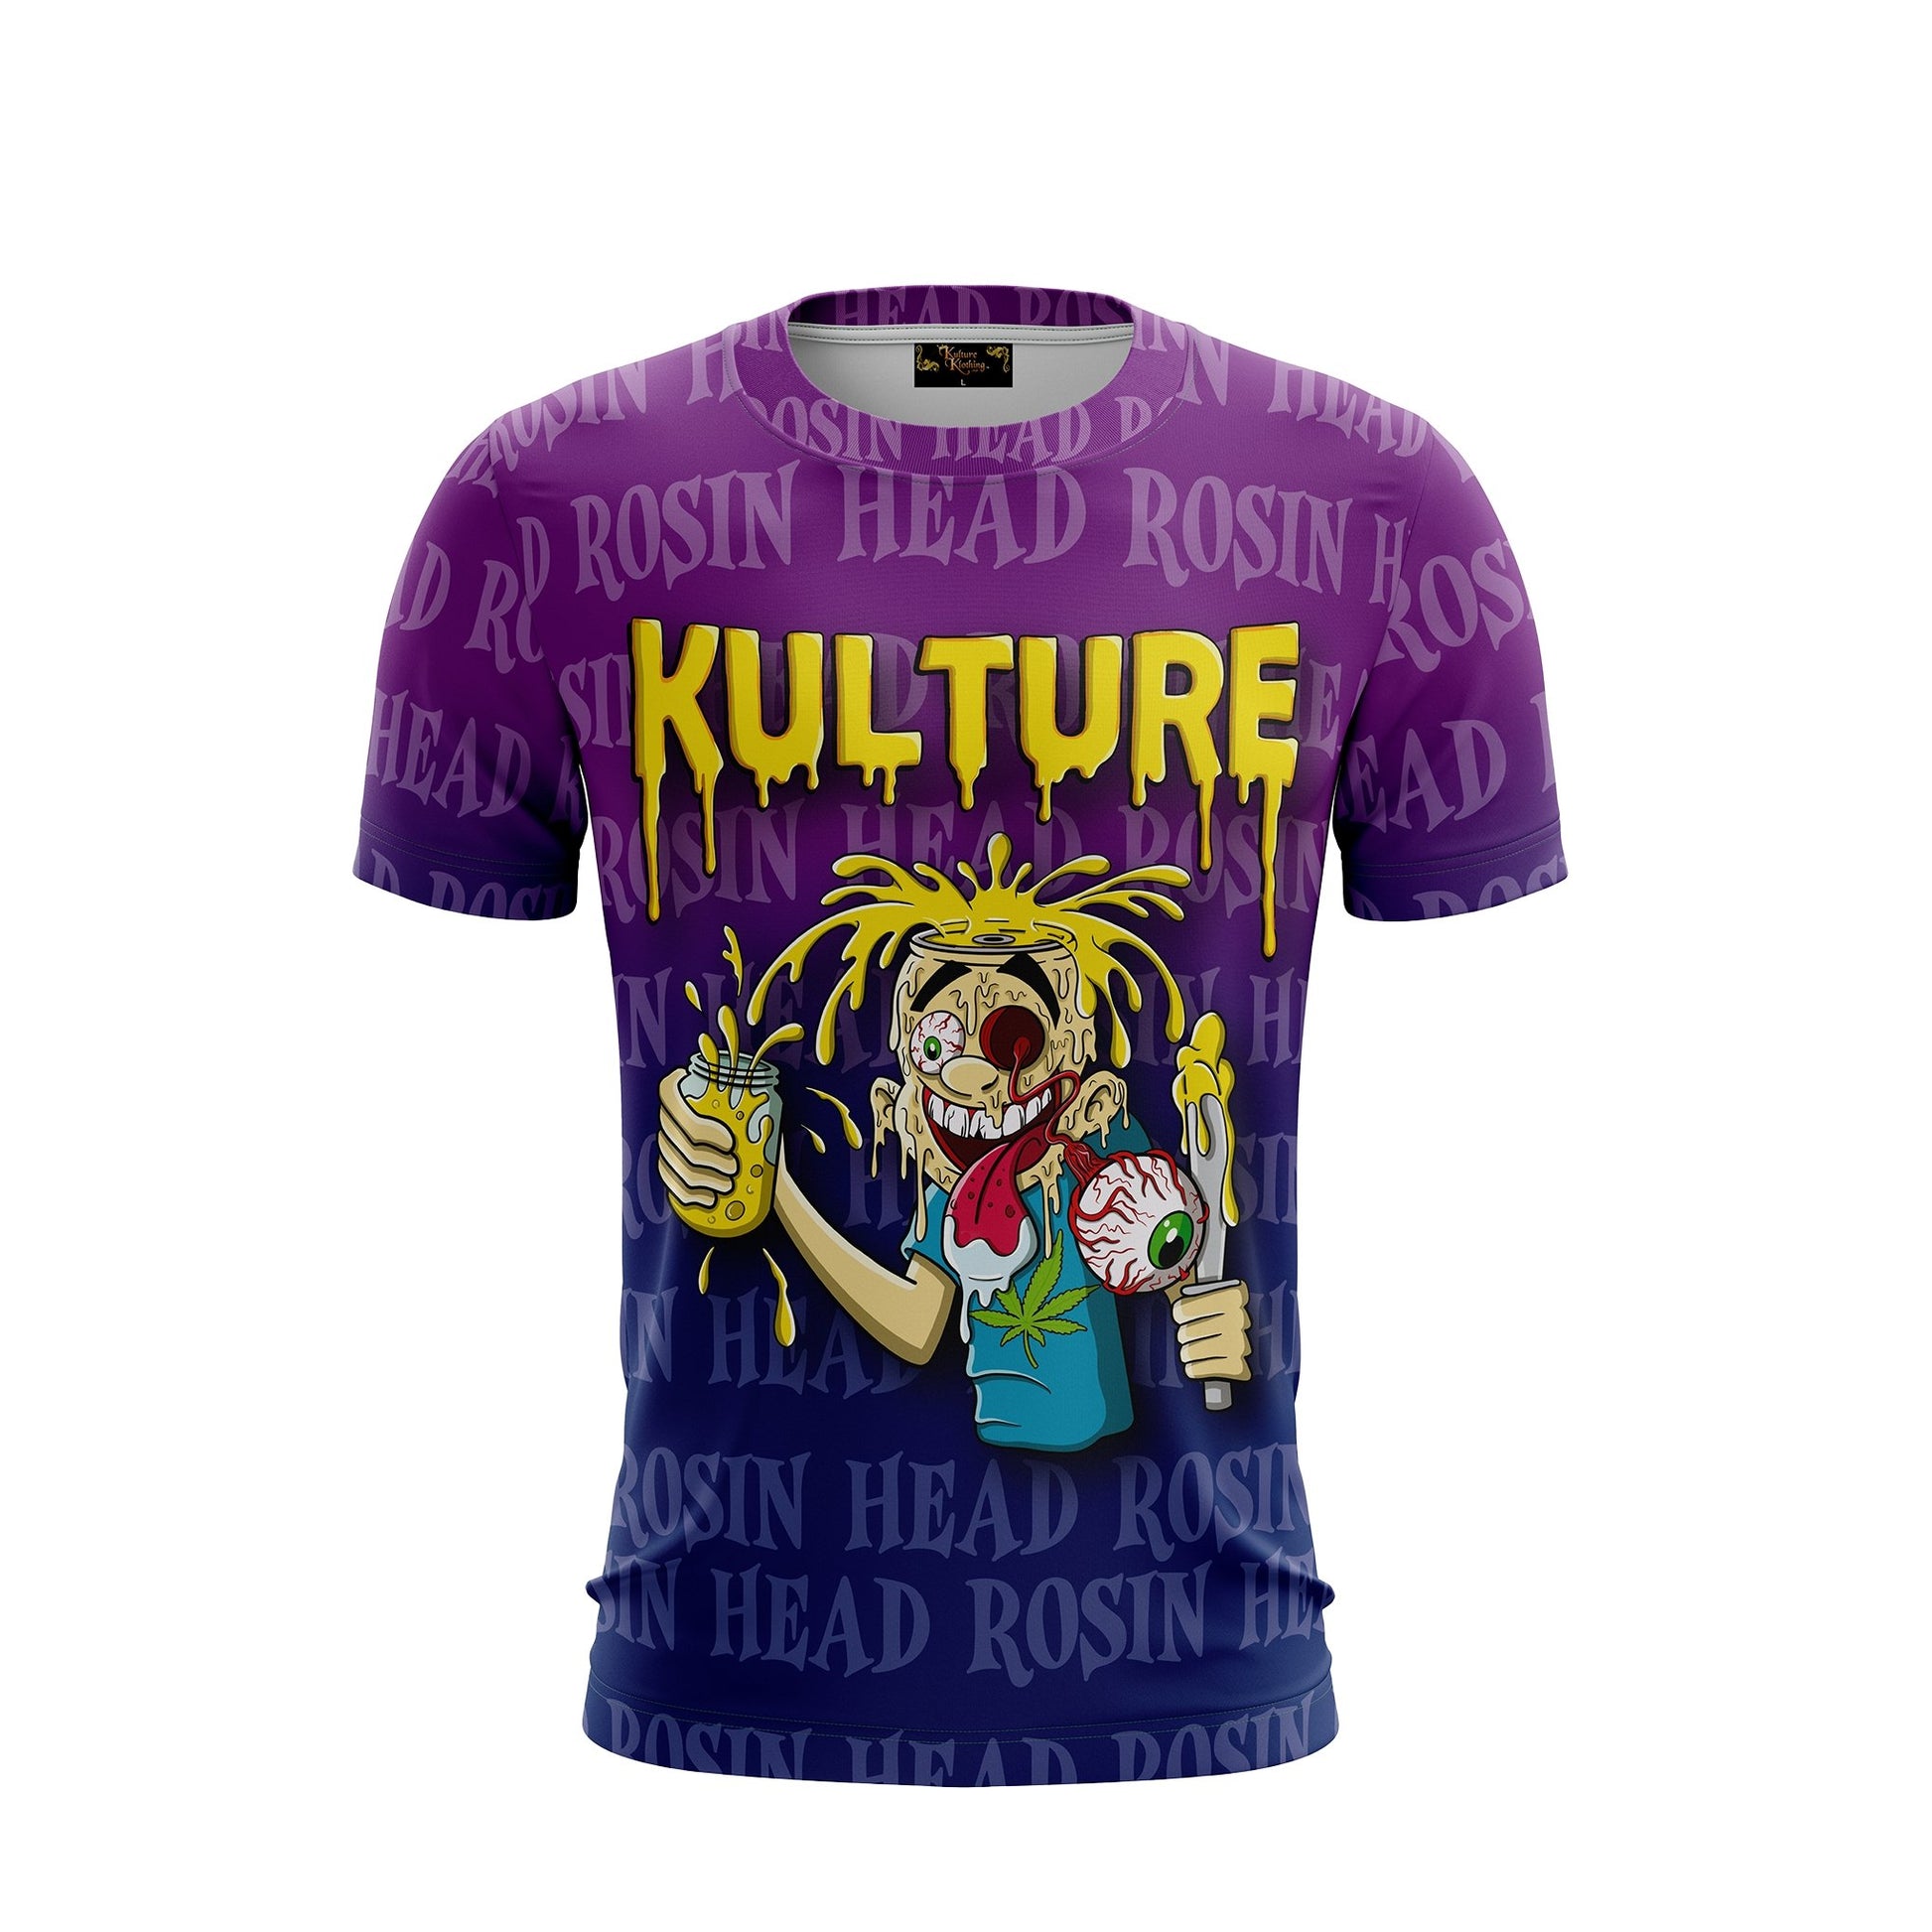 Rosin Head Dye Sublimation T-shirt - Kulture Klothing Club -